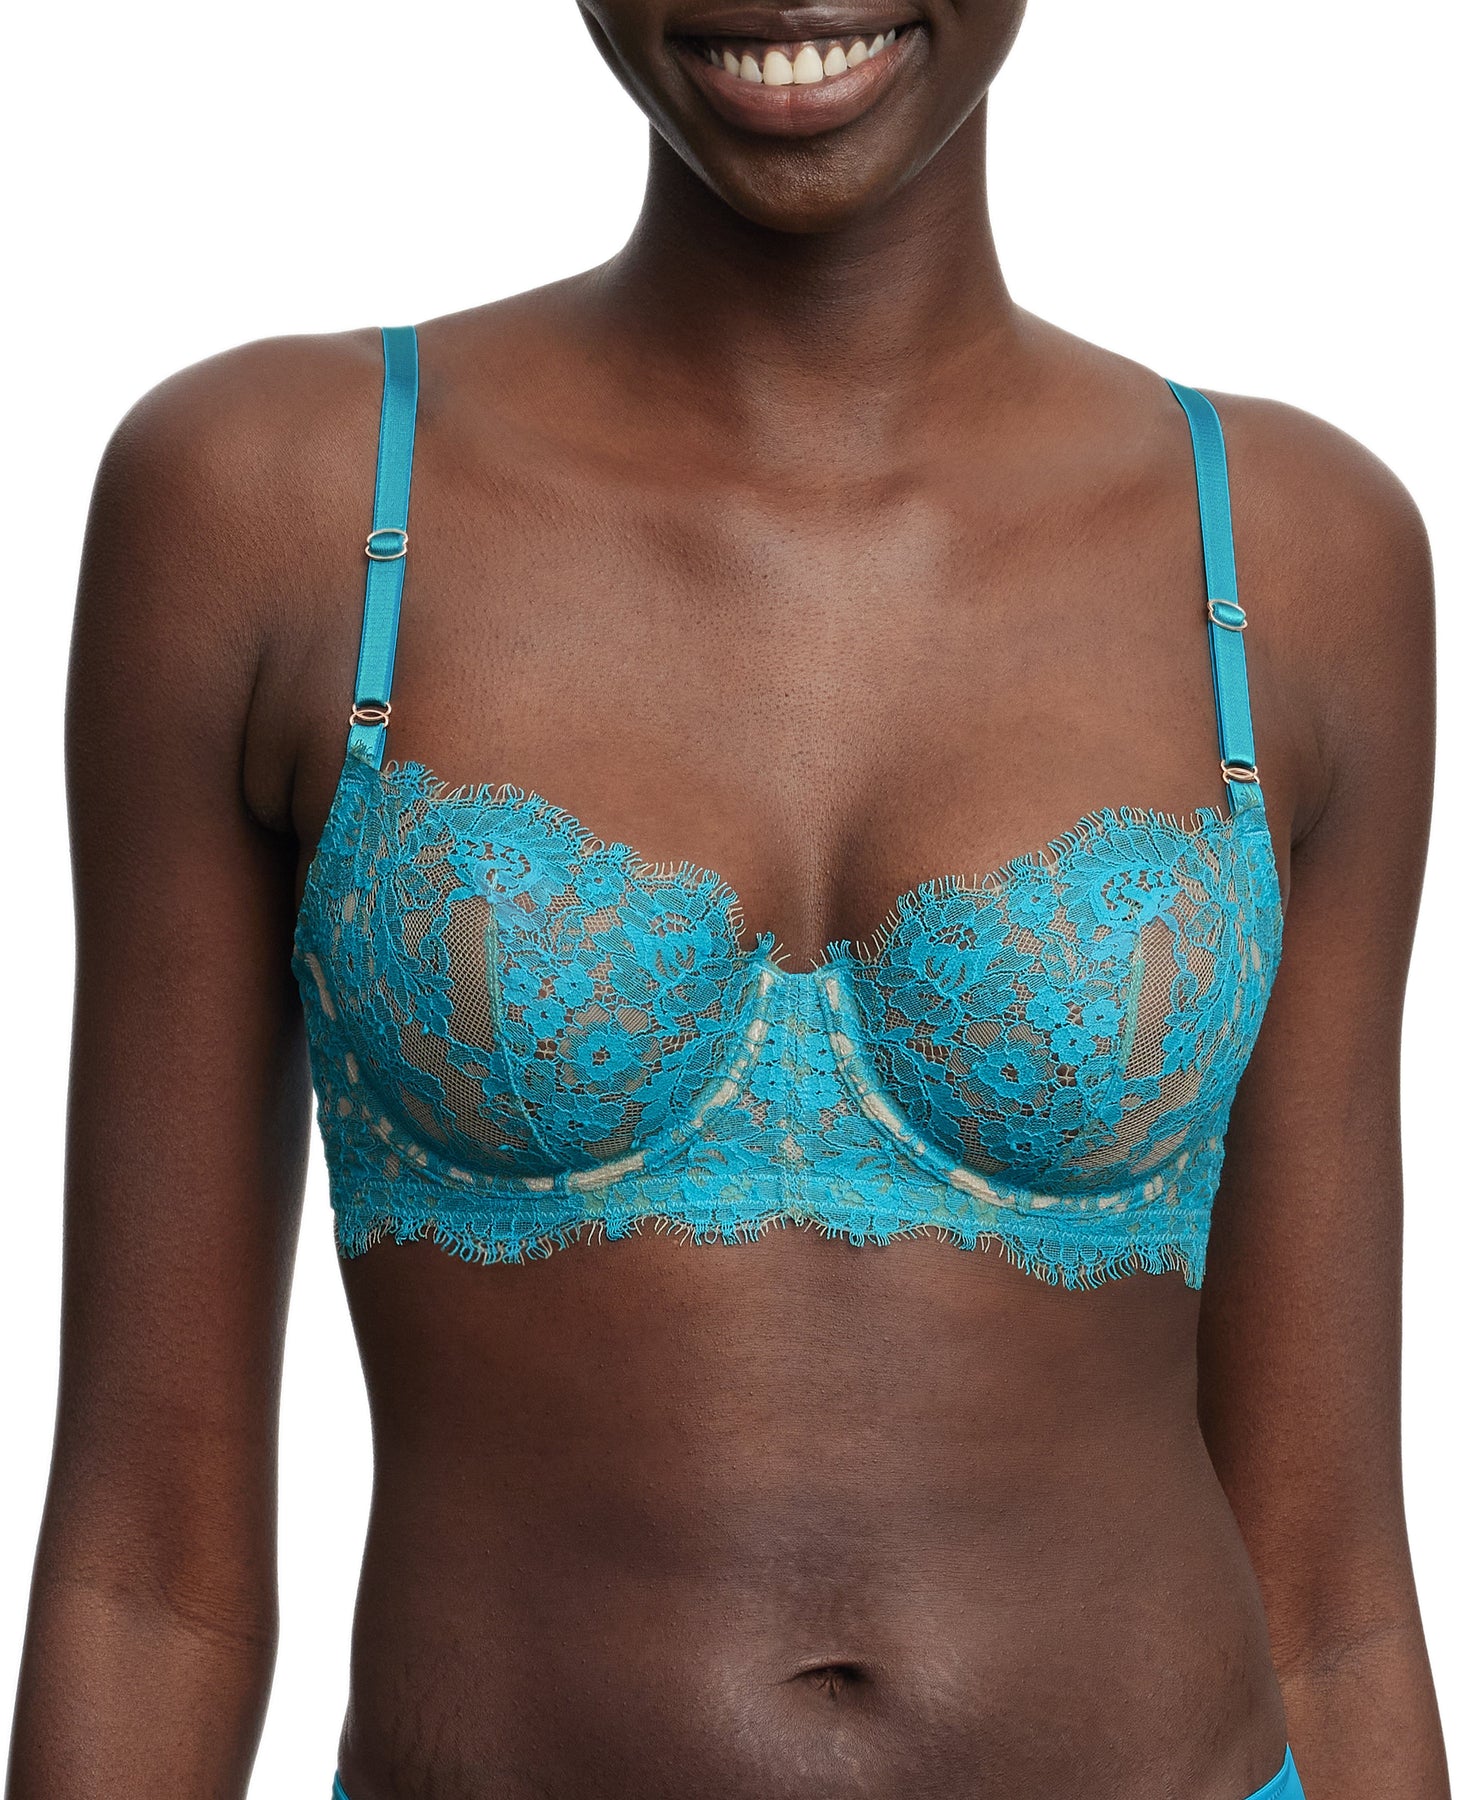 MELENECA Balconette Underwire Sexy Lace Bra for Women Blue 36C